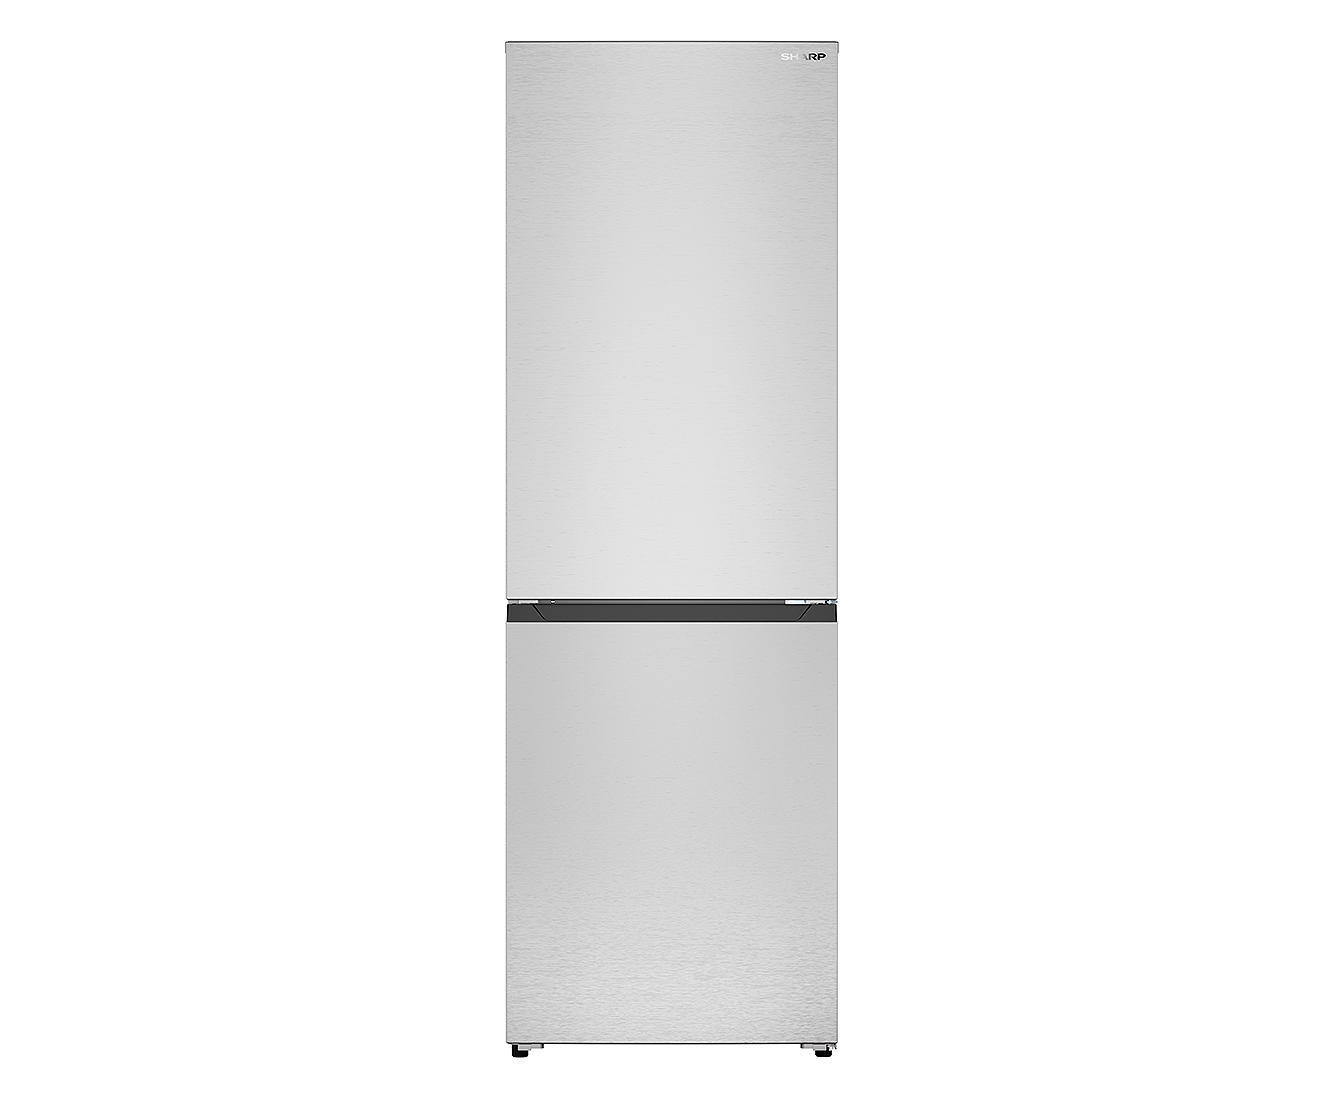 Sharp - 23.6 Inch 11.5 cu. ft Bottom Mount Refrigerator in Stainless - SJB1257HSC